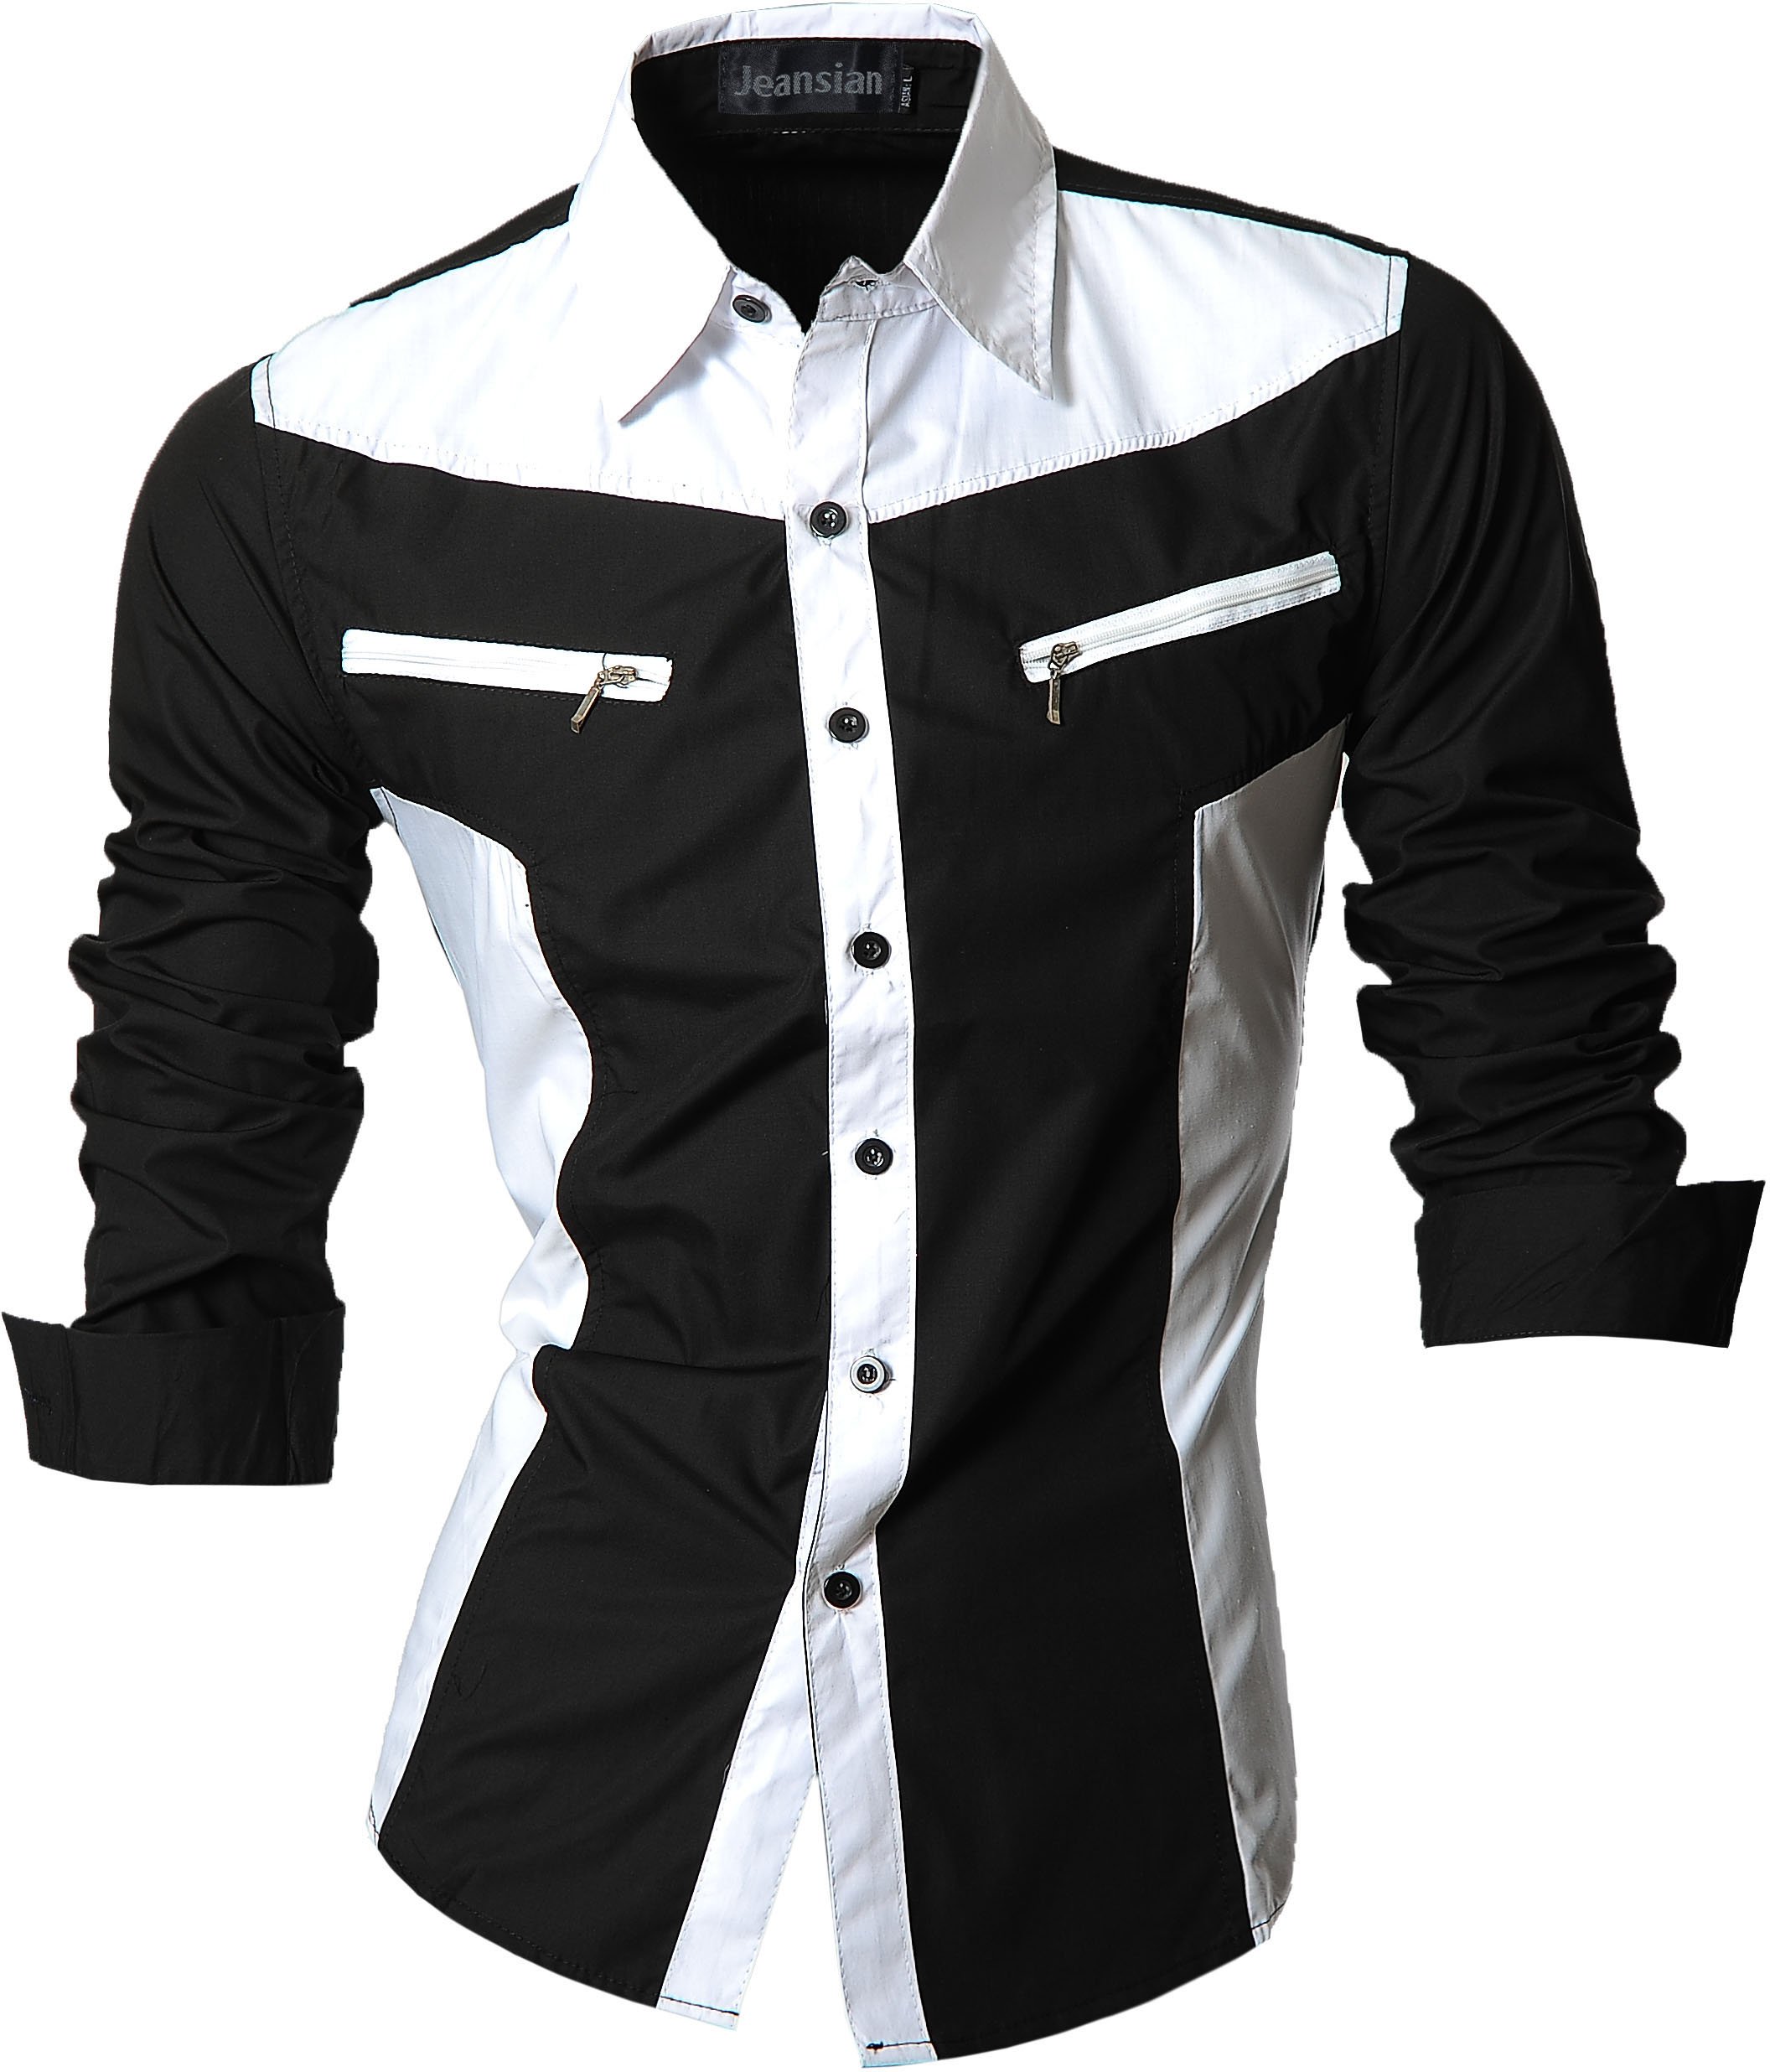 jeansian Herren Freizeit Hemden Shirt Tops Mode Langarmshirts Slim Fit Z018 Black XL